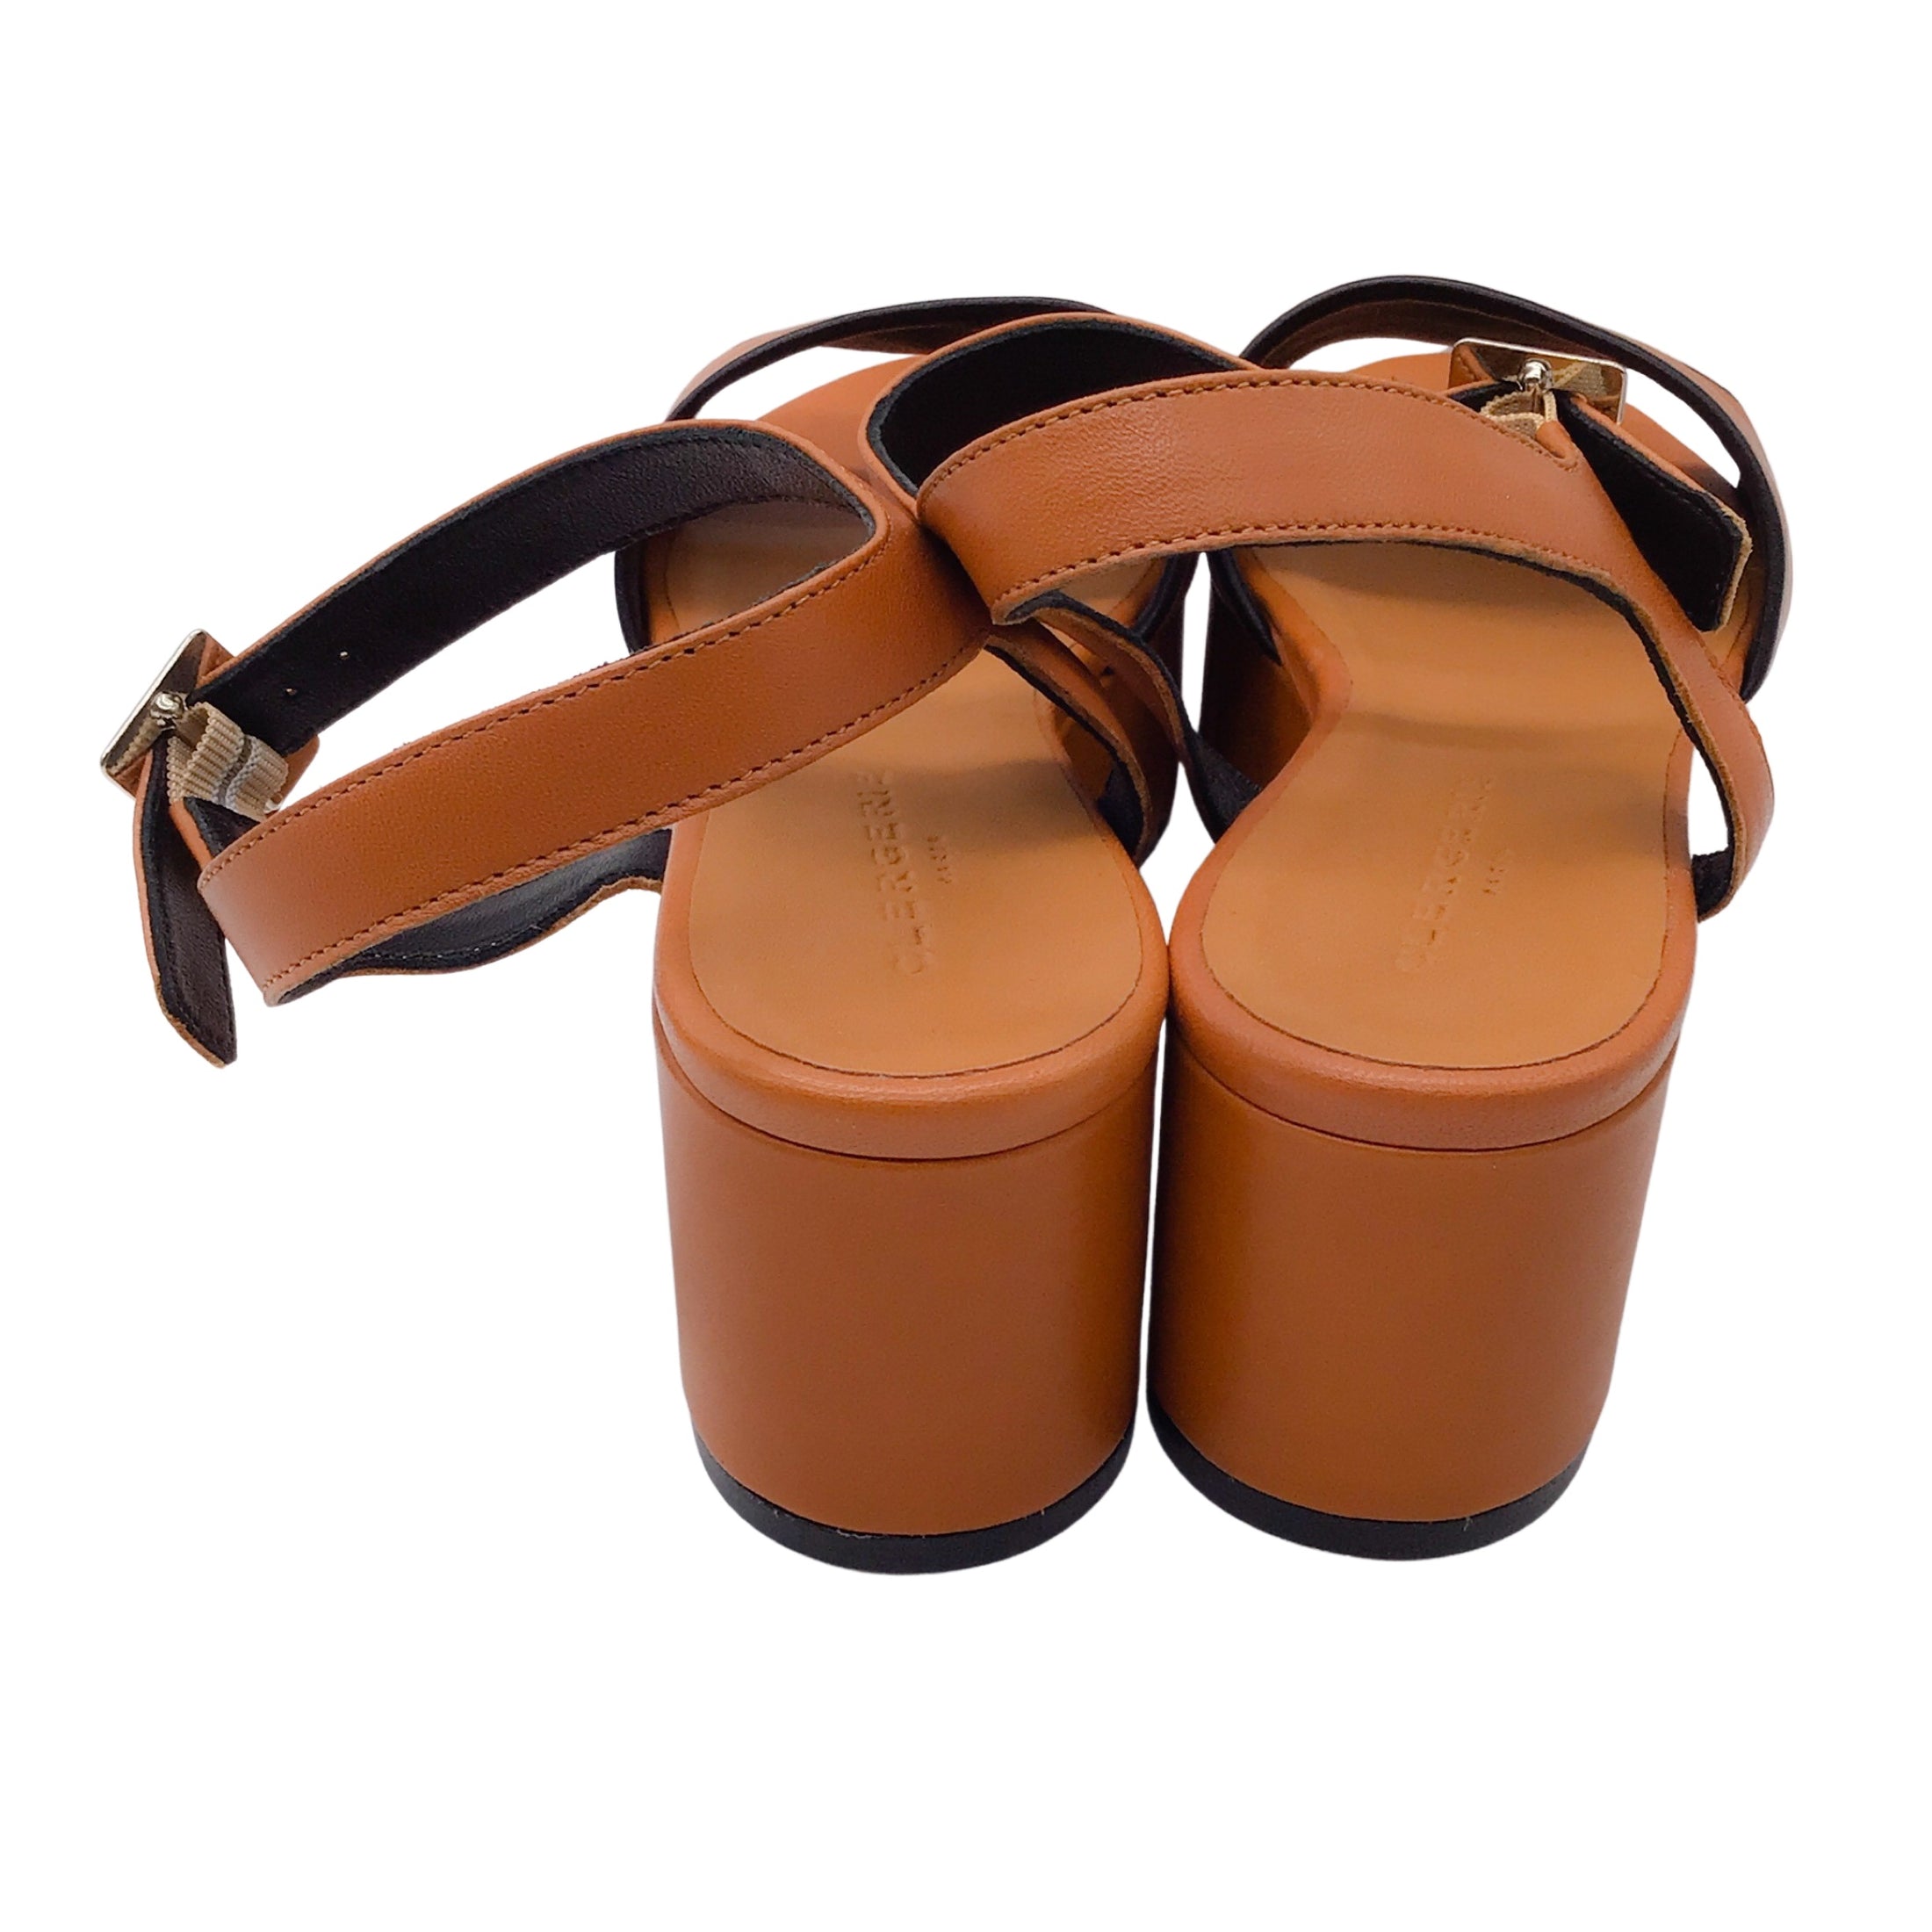 Robert Clergerie Light Brown / Black Trim Platform Leather Sandals